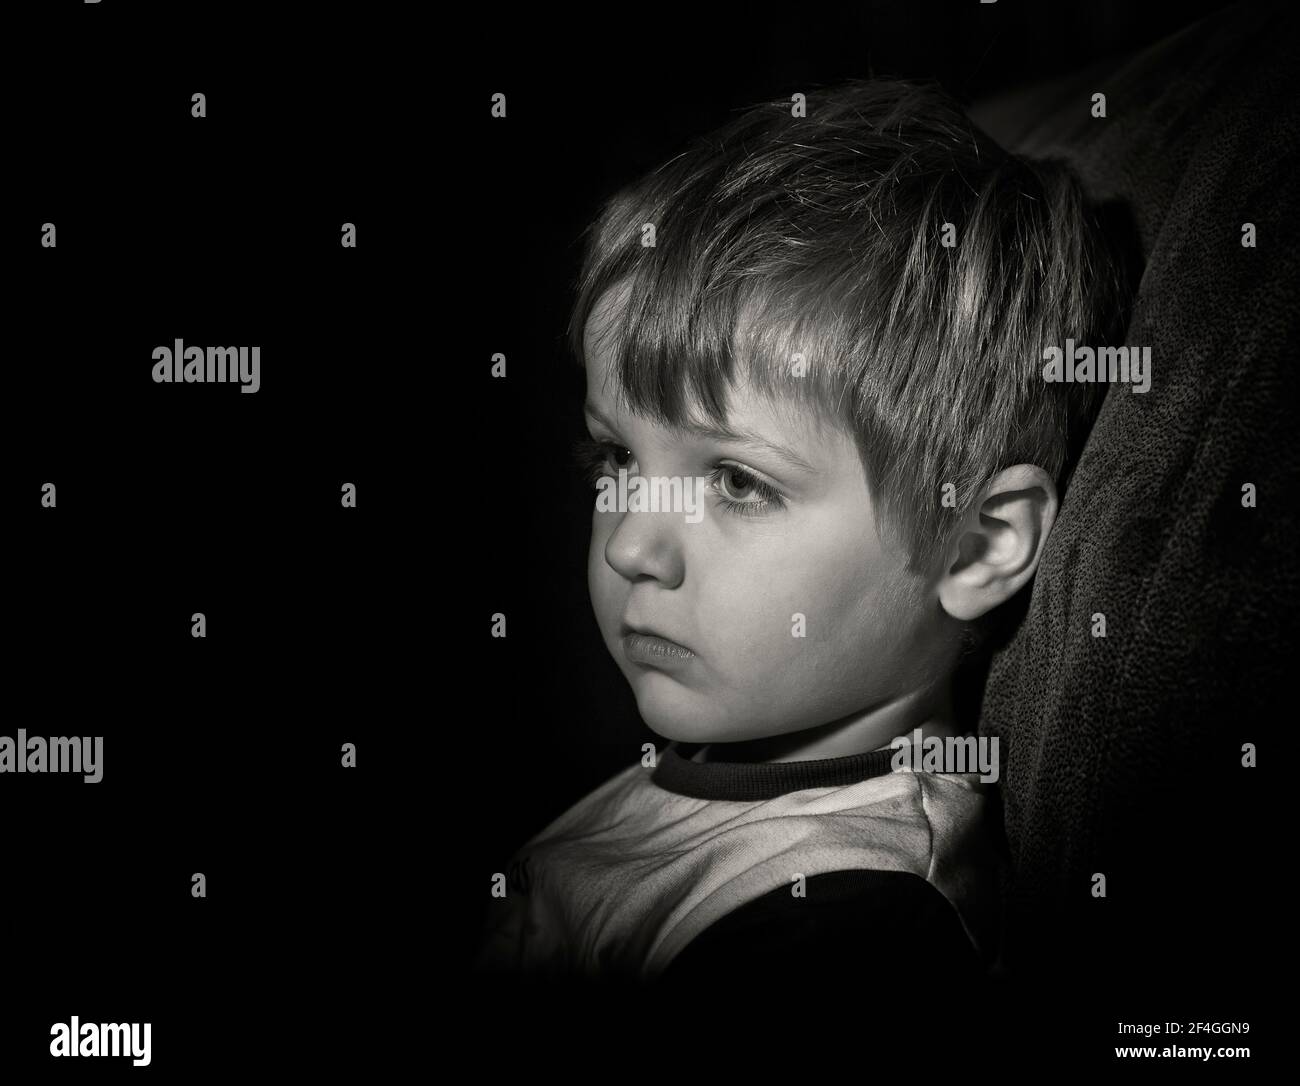 Black and white child portrait Stock Photo